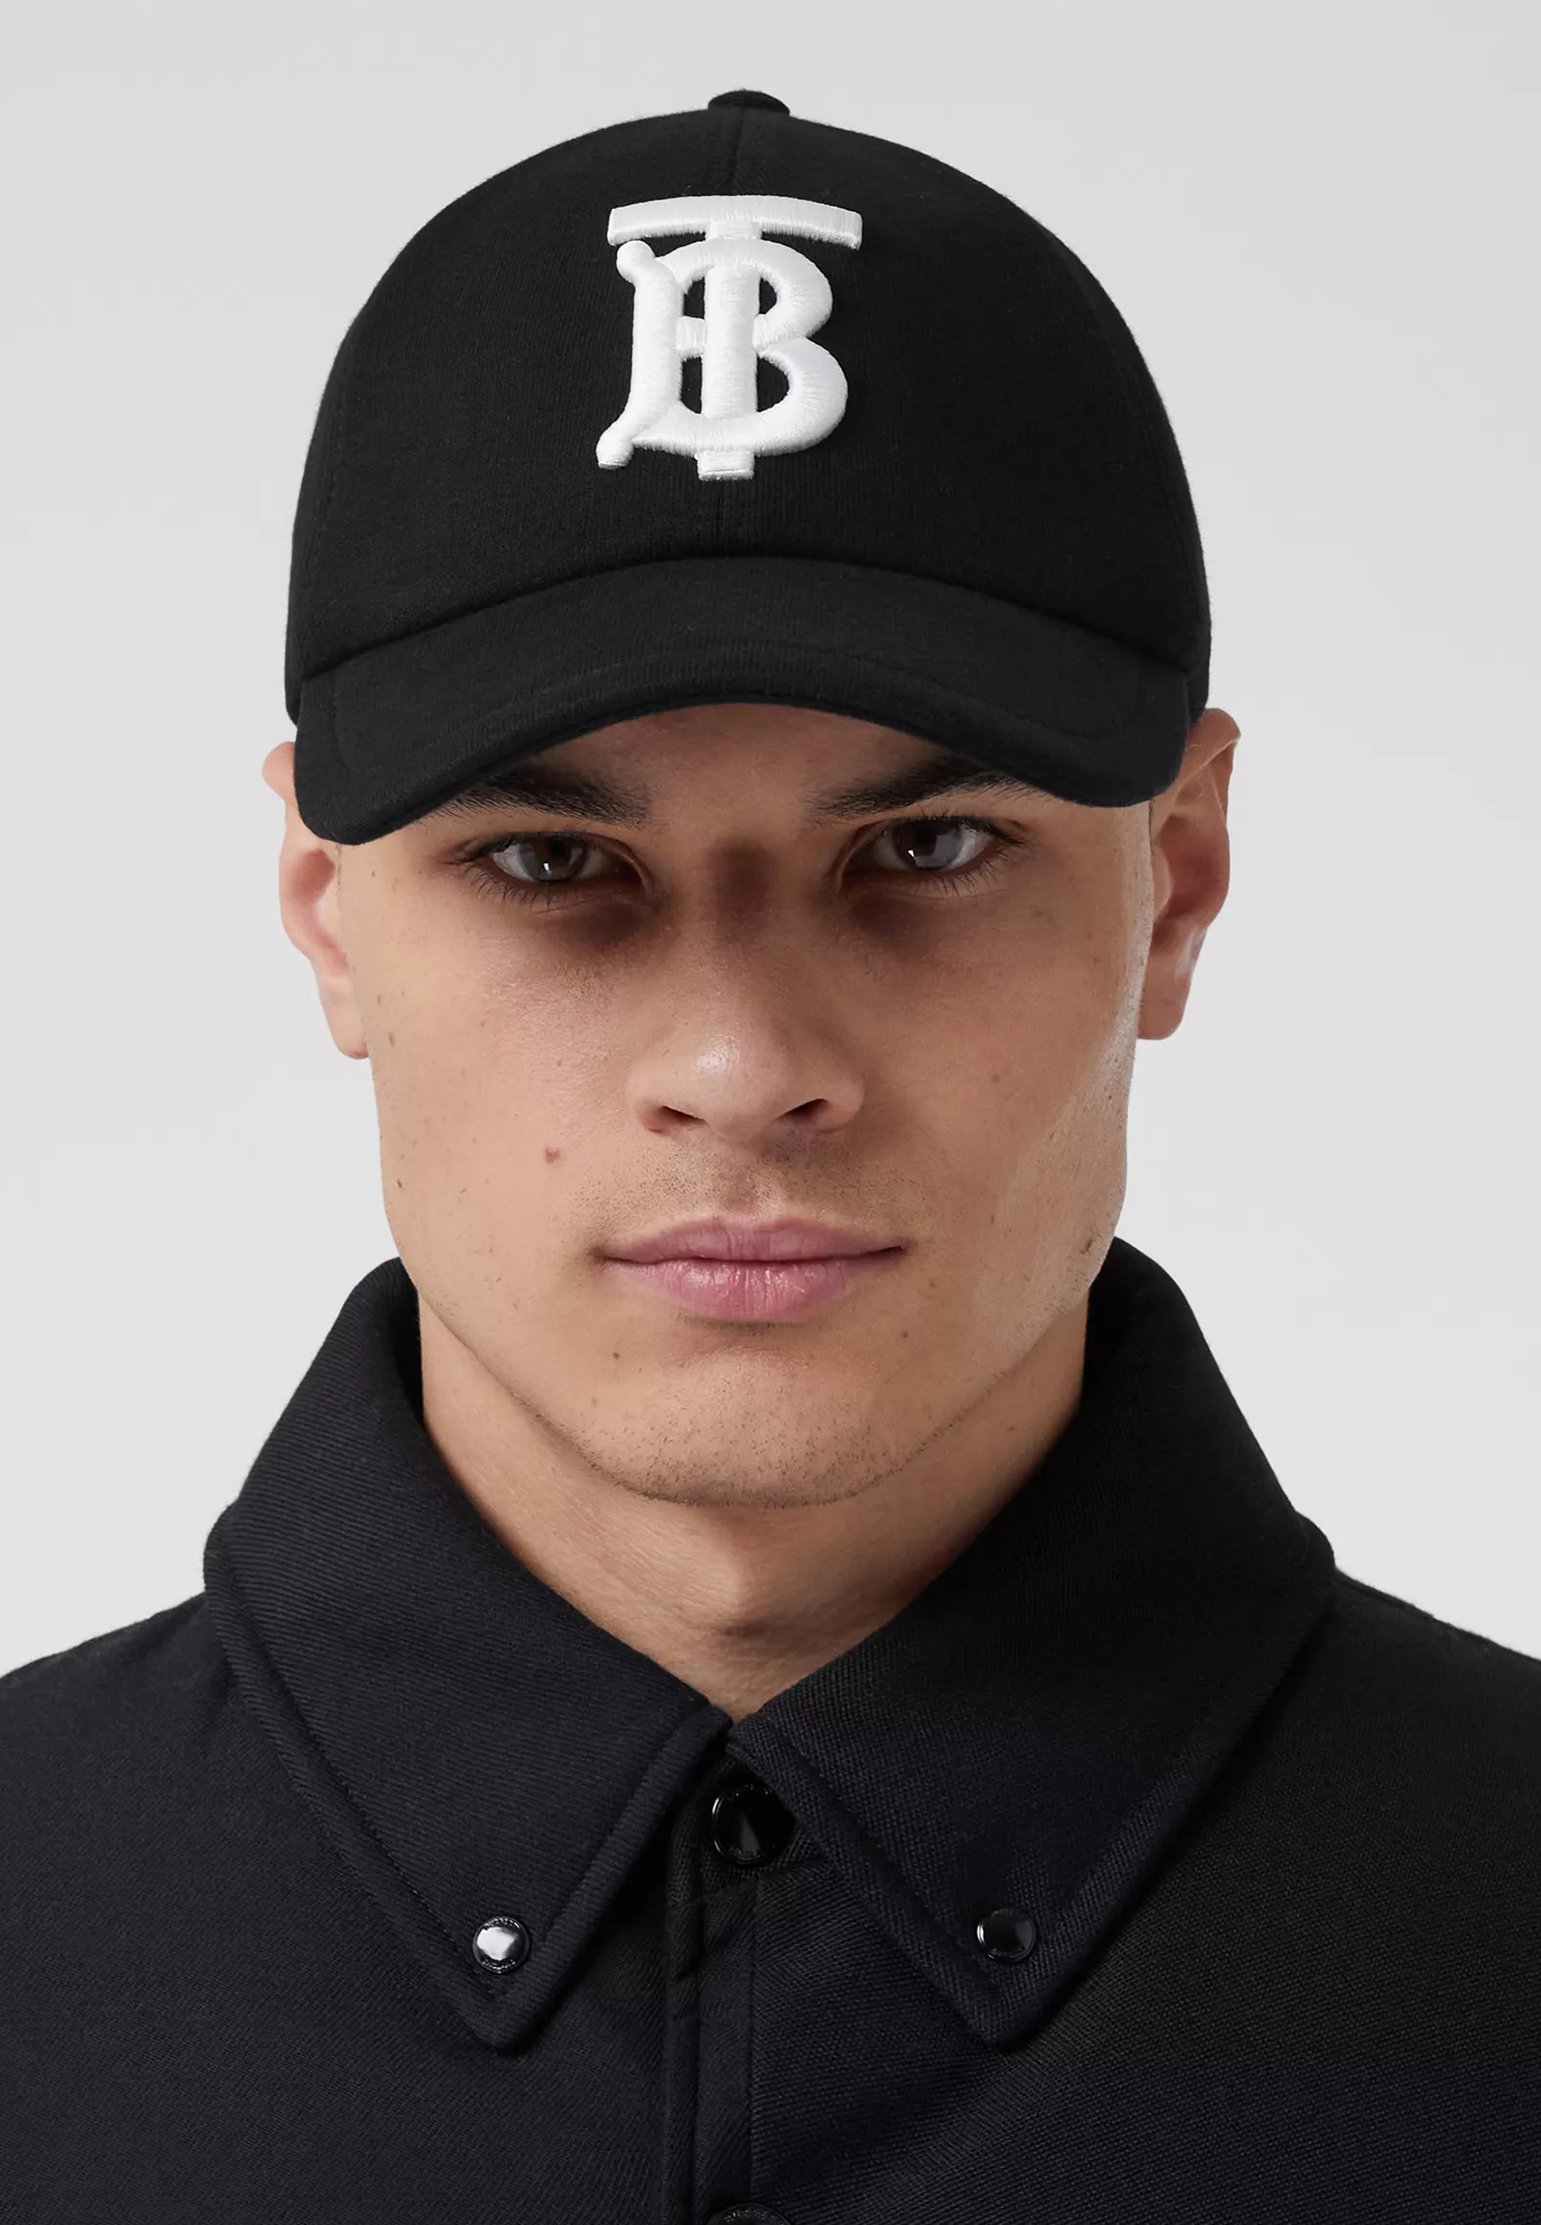 Baseball cap BURBERRY Color: black (Code: 905) in online store Allure